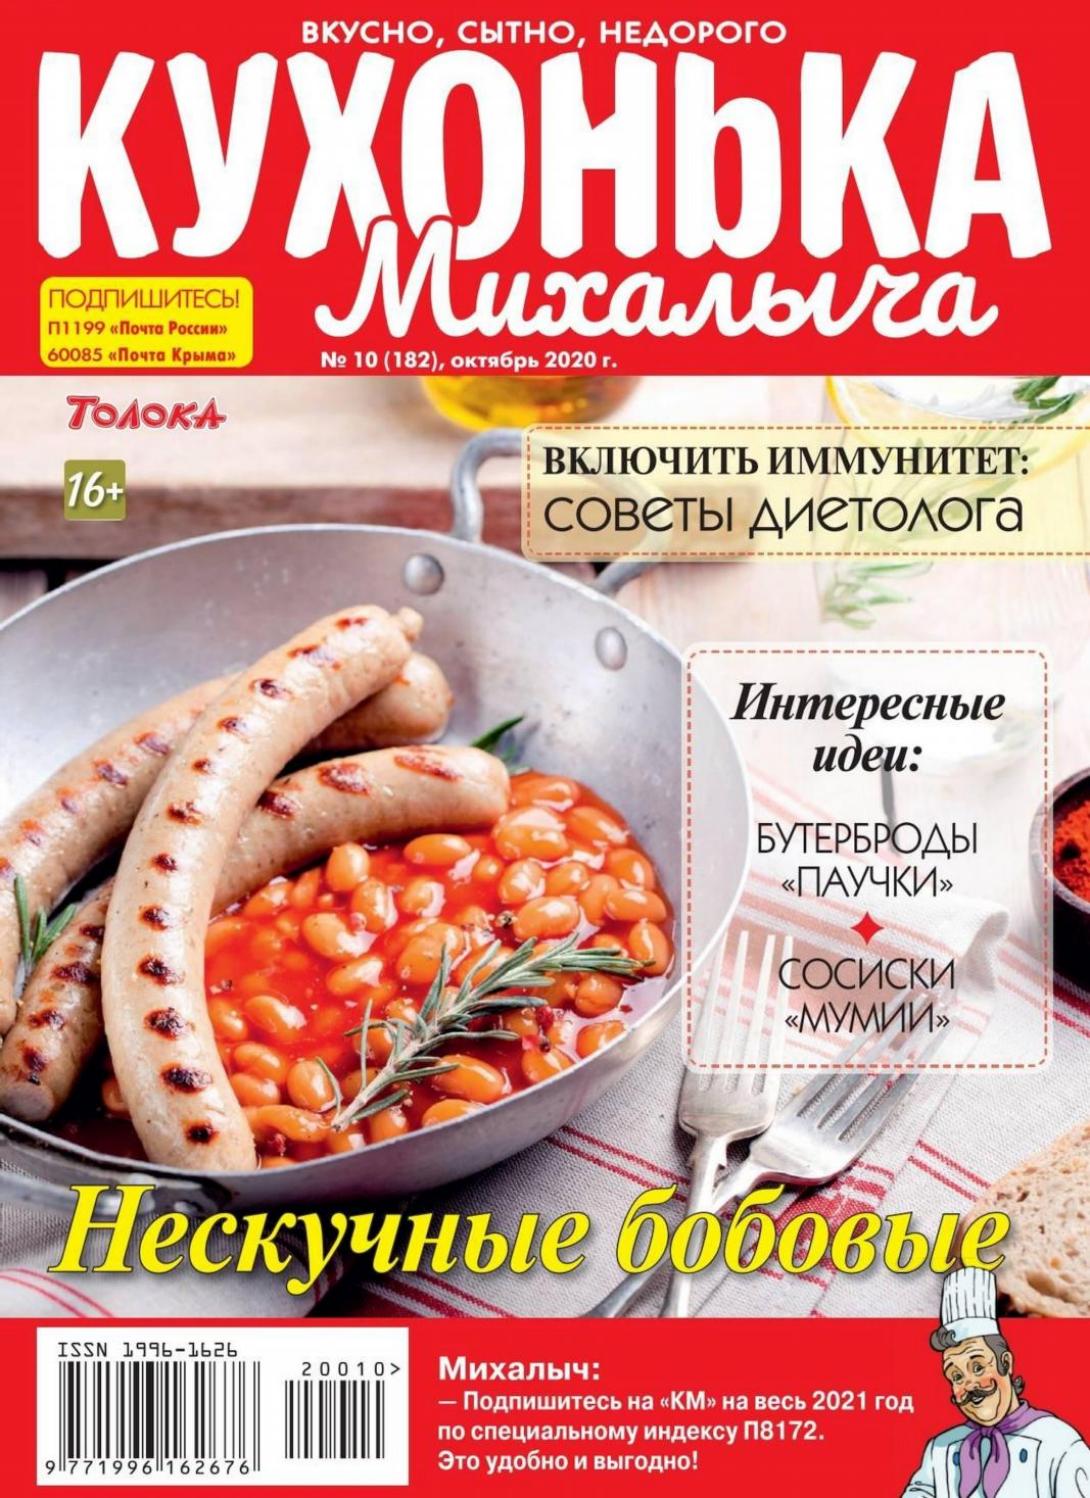 Кухонька Михалыча №10, октябрь 2020